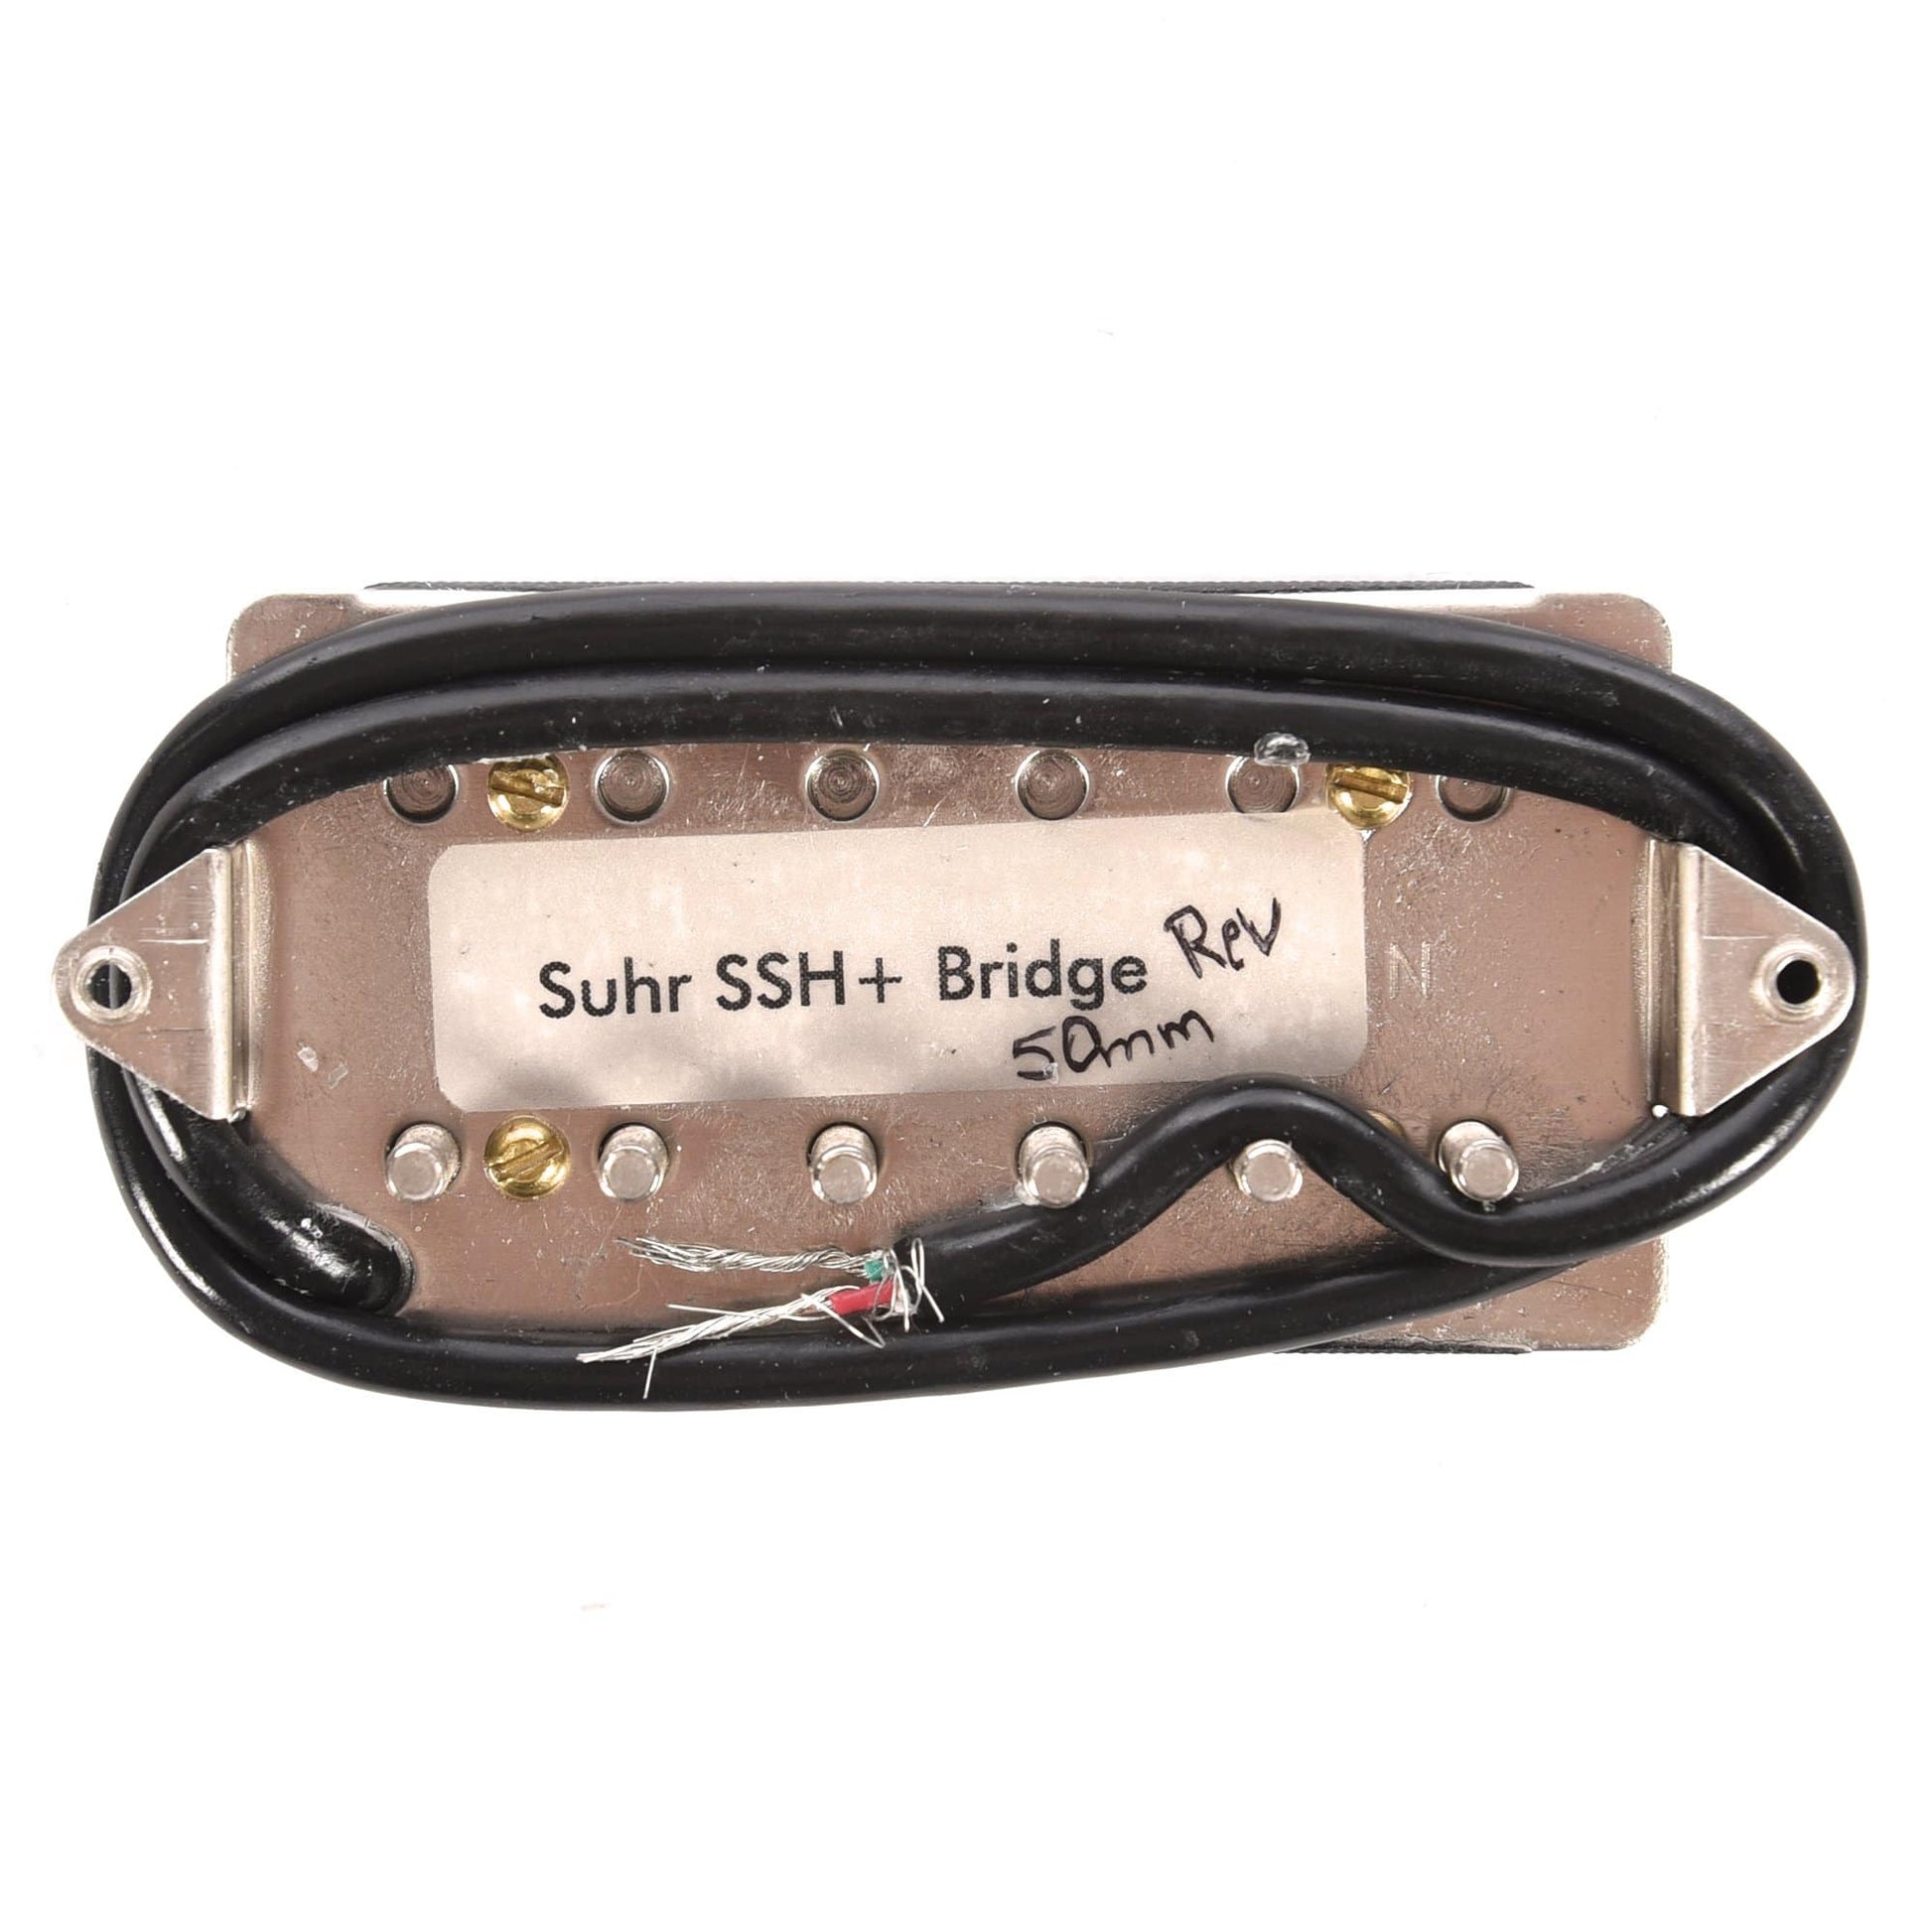 Suhr SSH Plus Single Screw Hot Humbucker Bridge Reverse Zebra 50mm Parts / Guitar Pickups